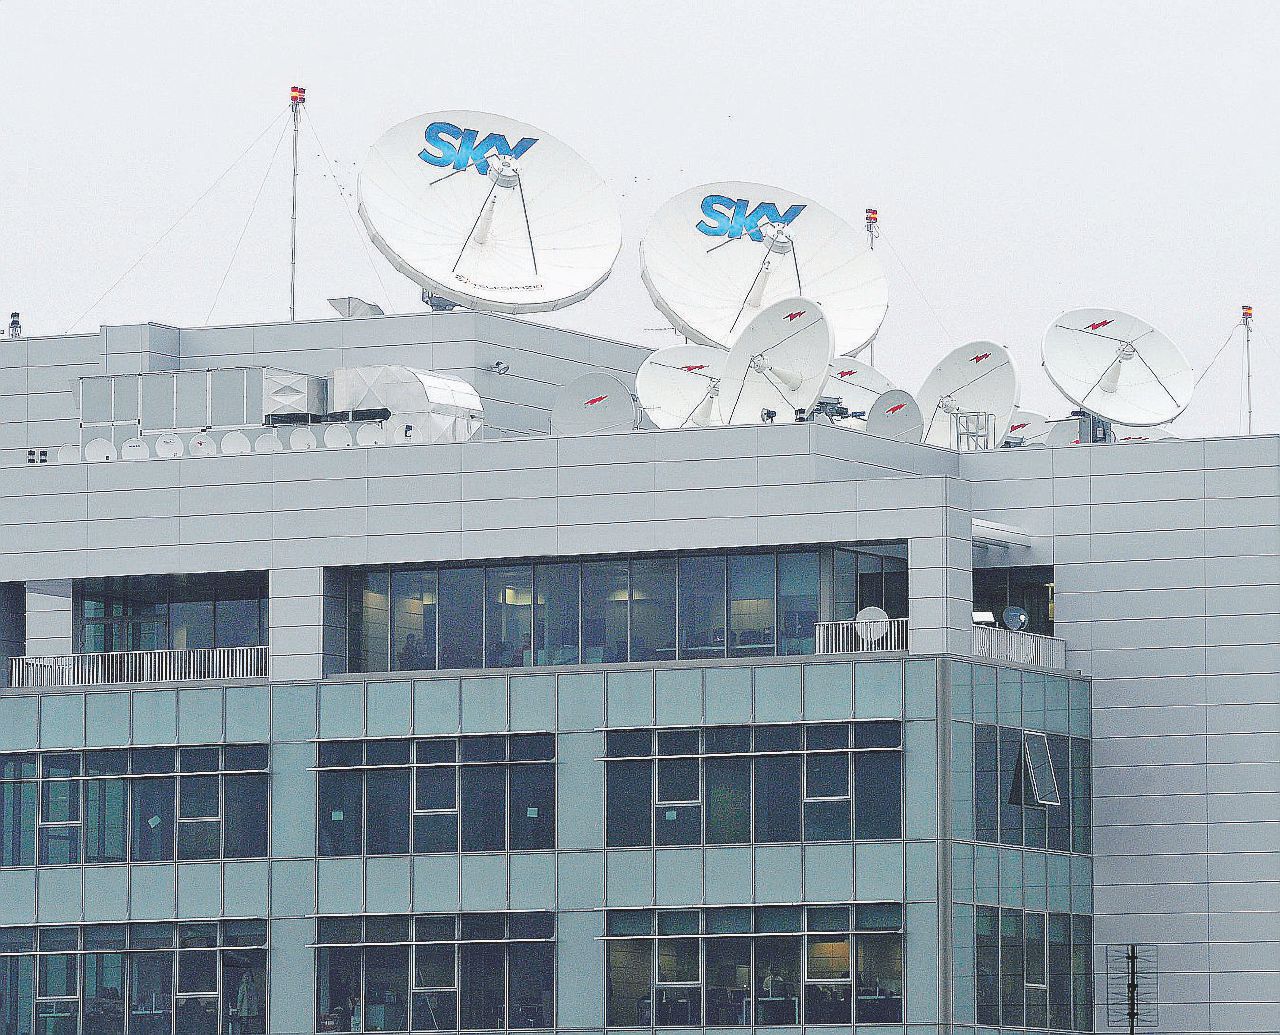 Copertina di A Sky i licenziamenti pagano investimenti high tech e diritti tv